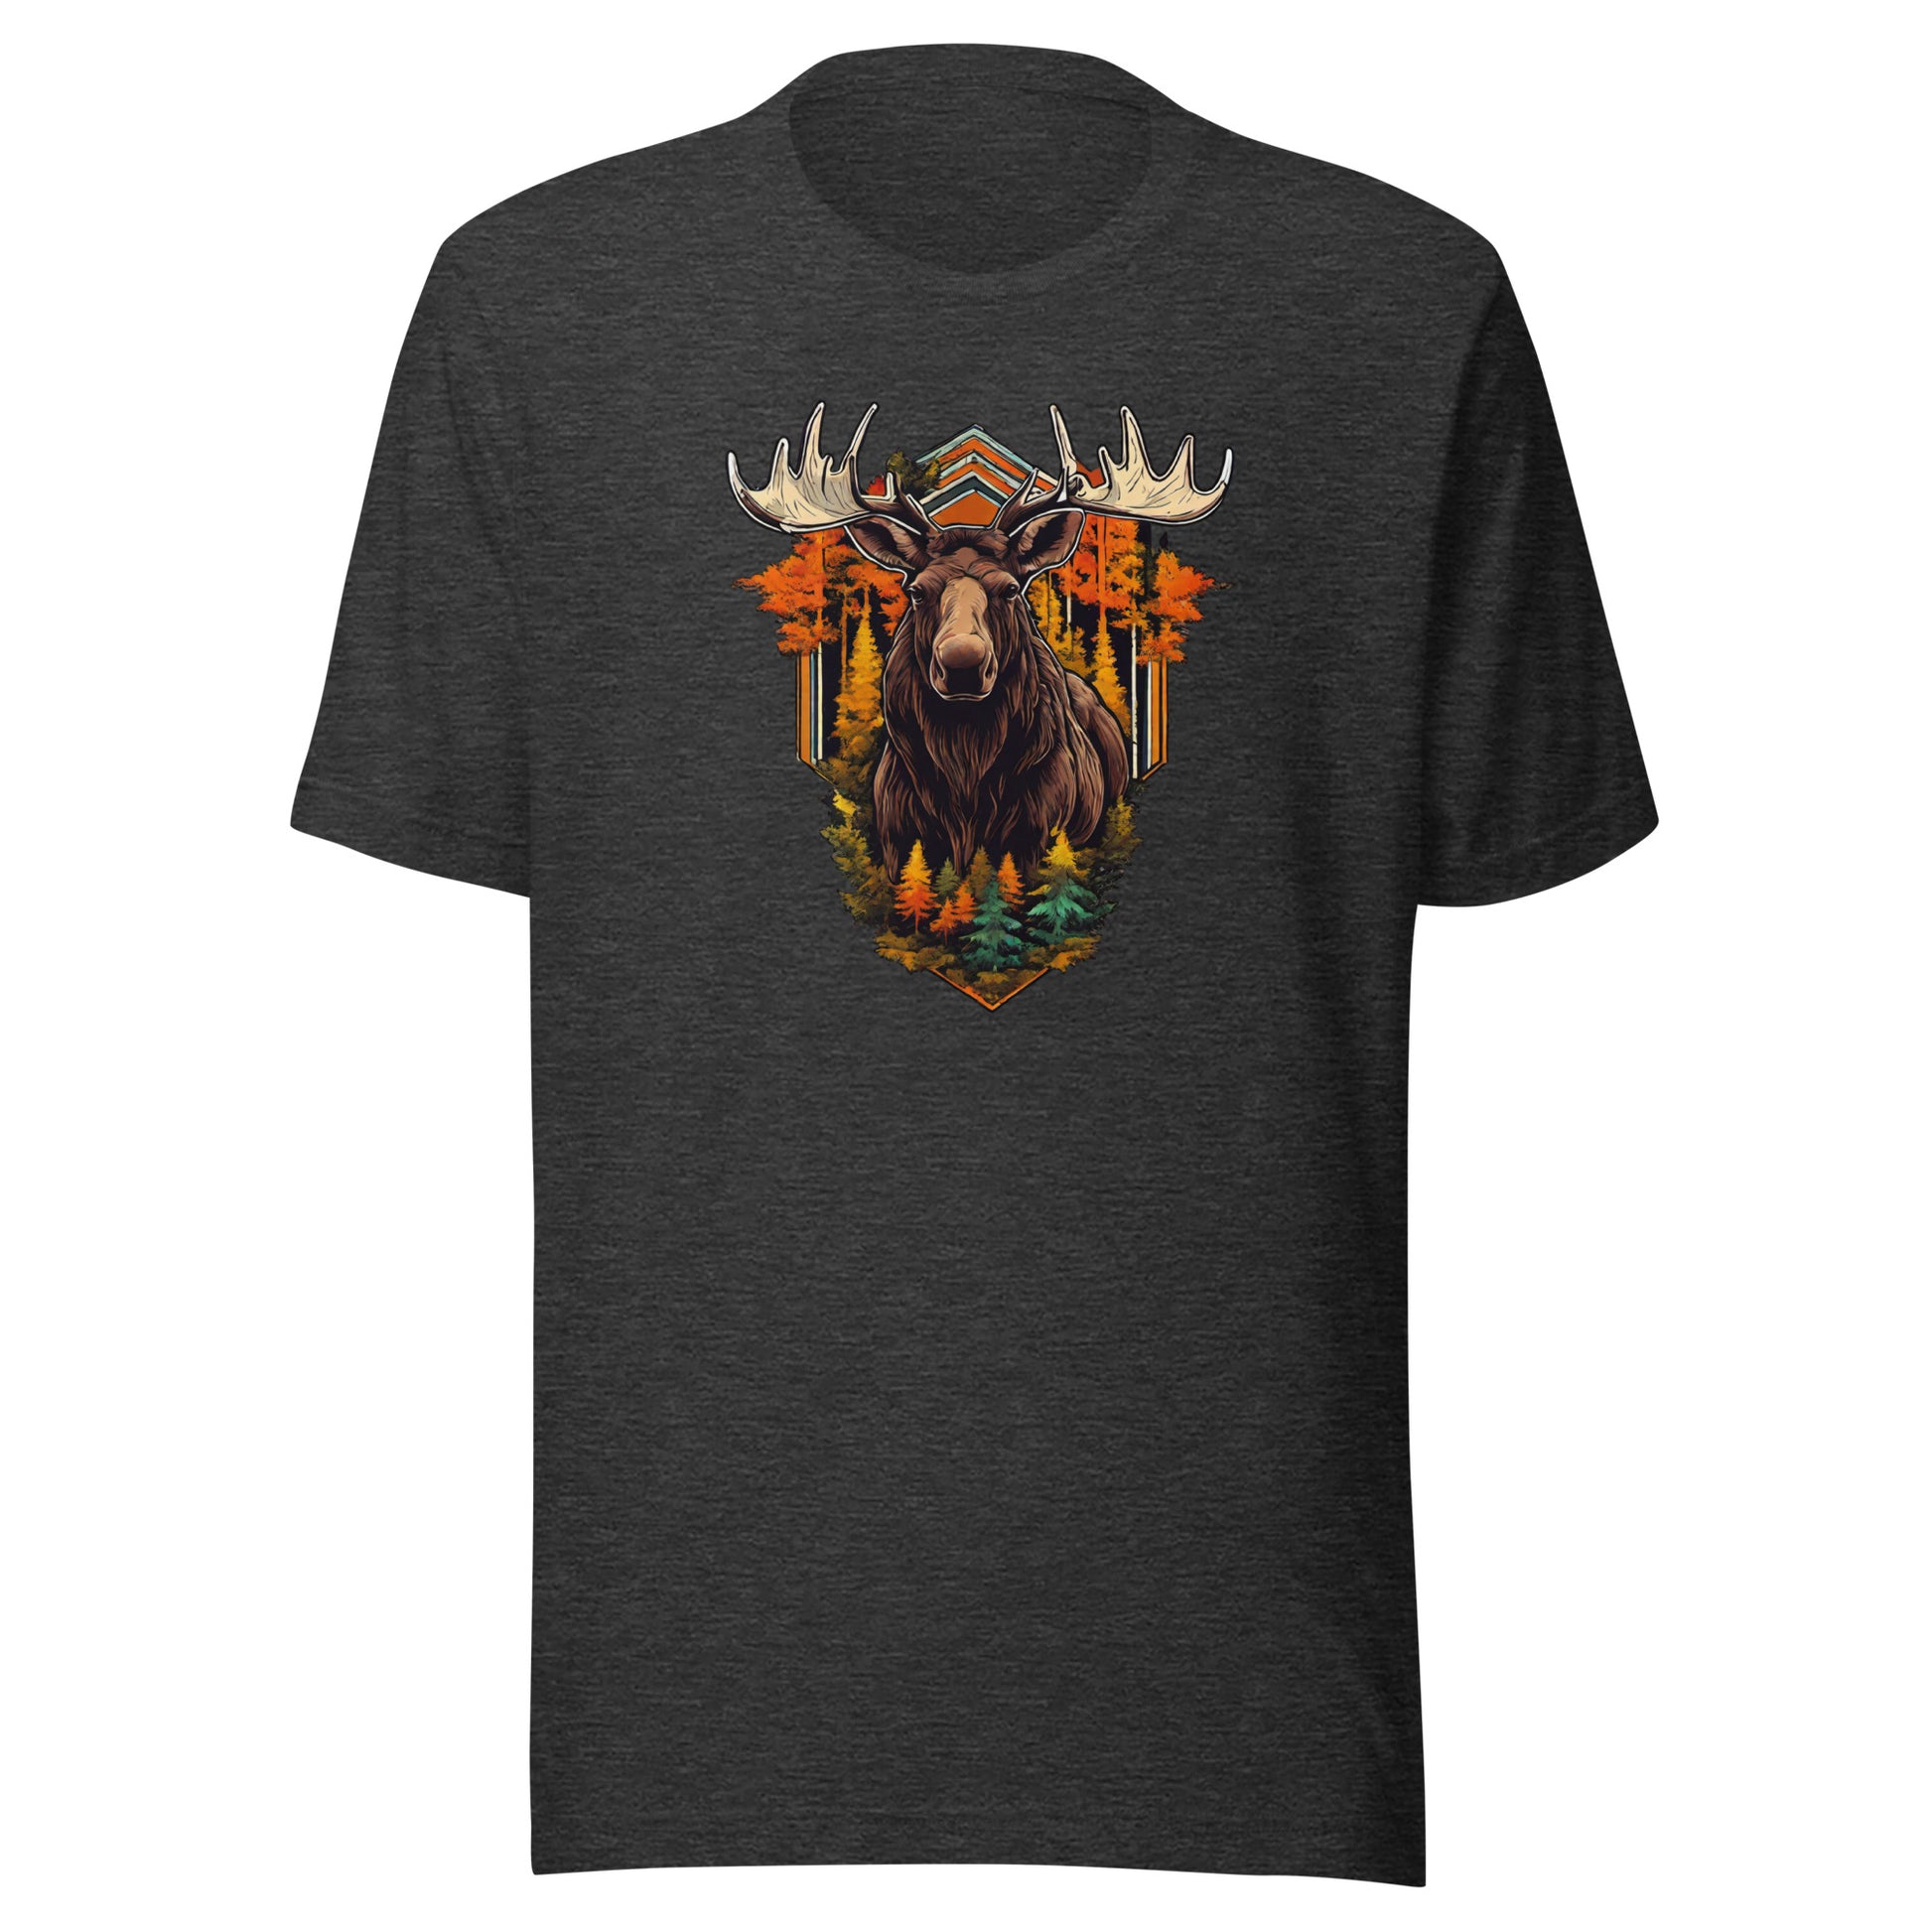 Moose & Forest Emblem Men's T-Shirt Dark Grey Heather